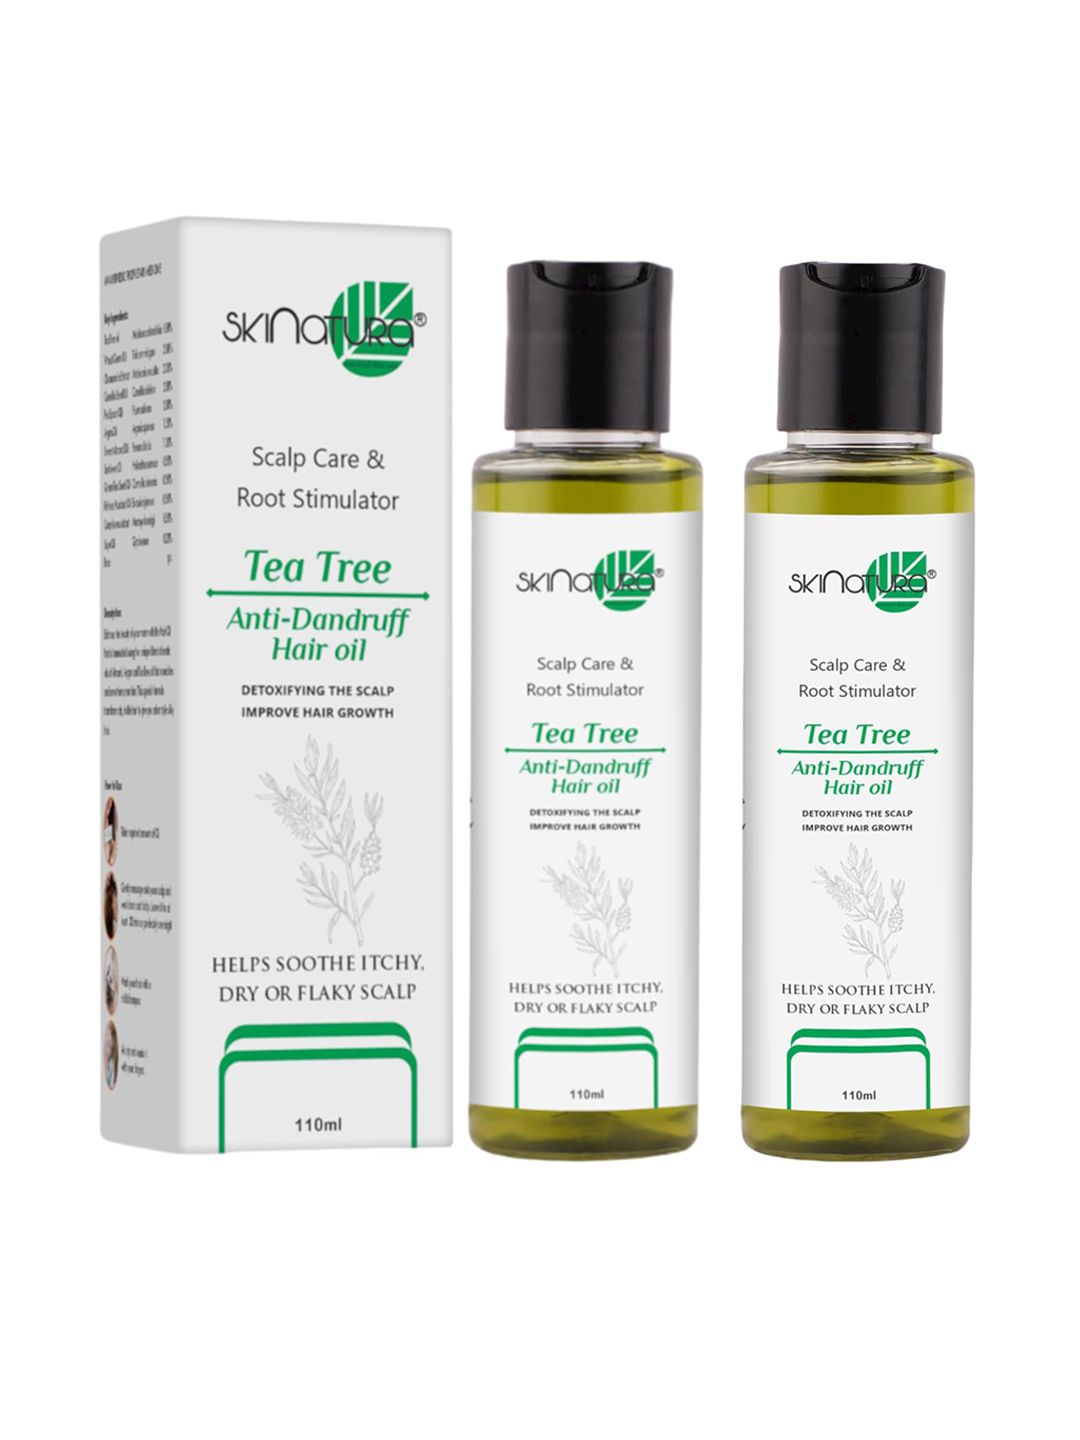 Skinatura Set of 2 Tea Tree Anti-Dandruff Hair Oil - 110ml each Price in India